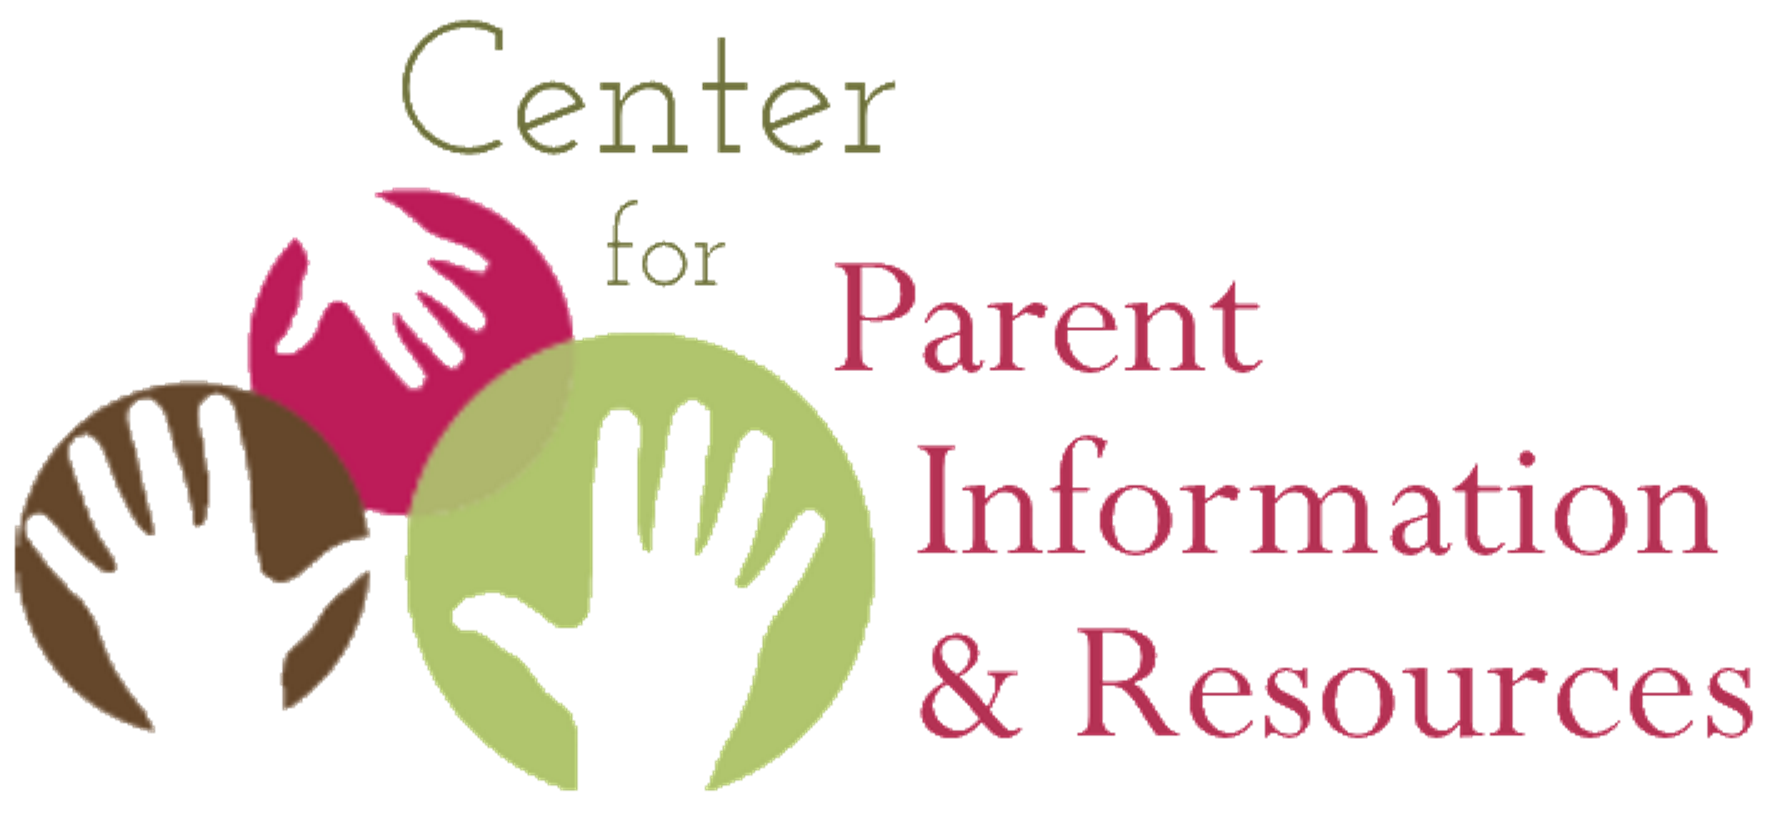 Center for Parent Information & Resources logo.